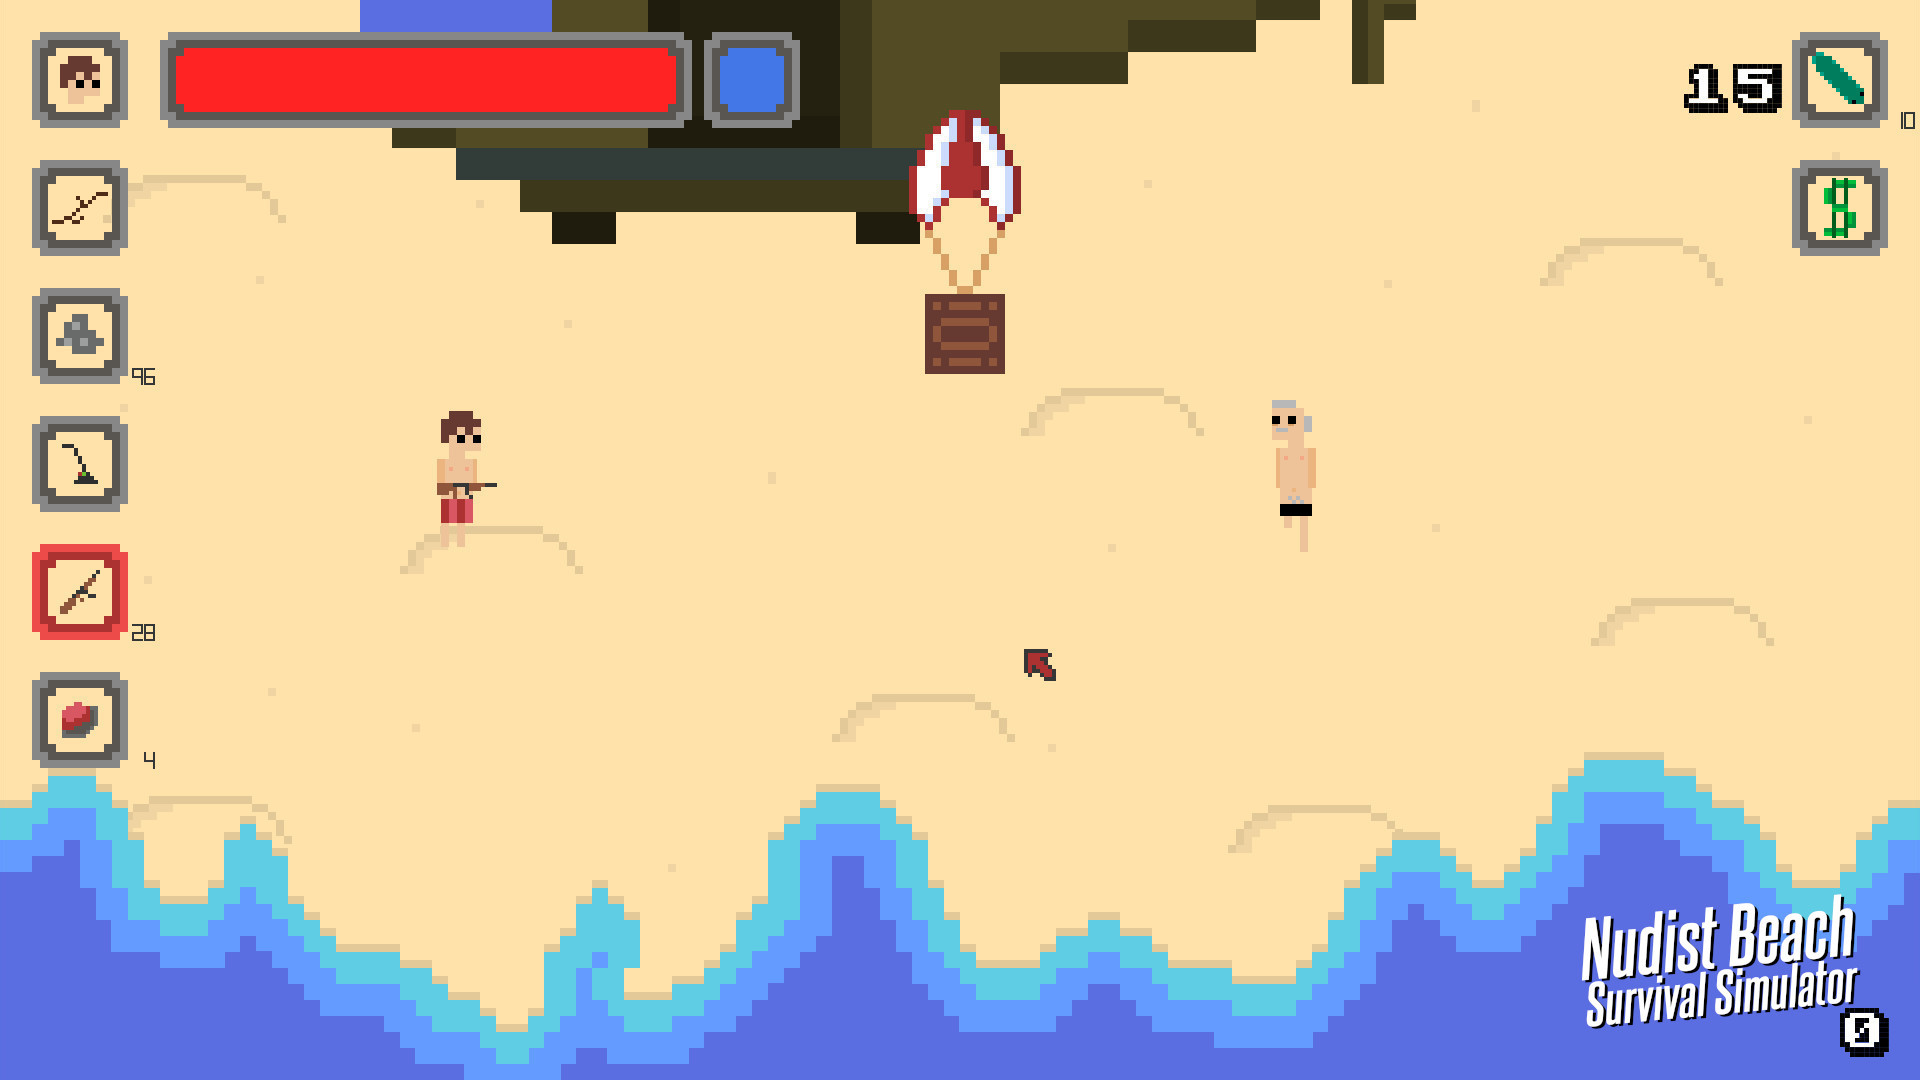 Nudist Beach Survival Simulator screenshot